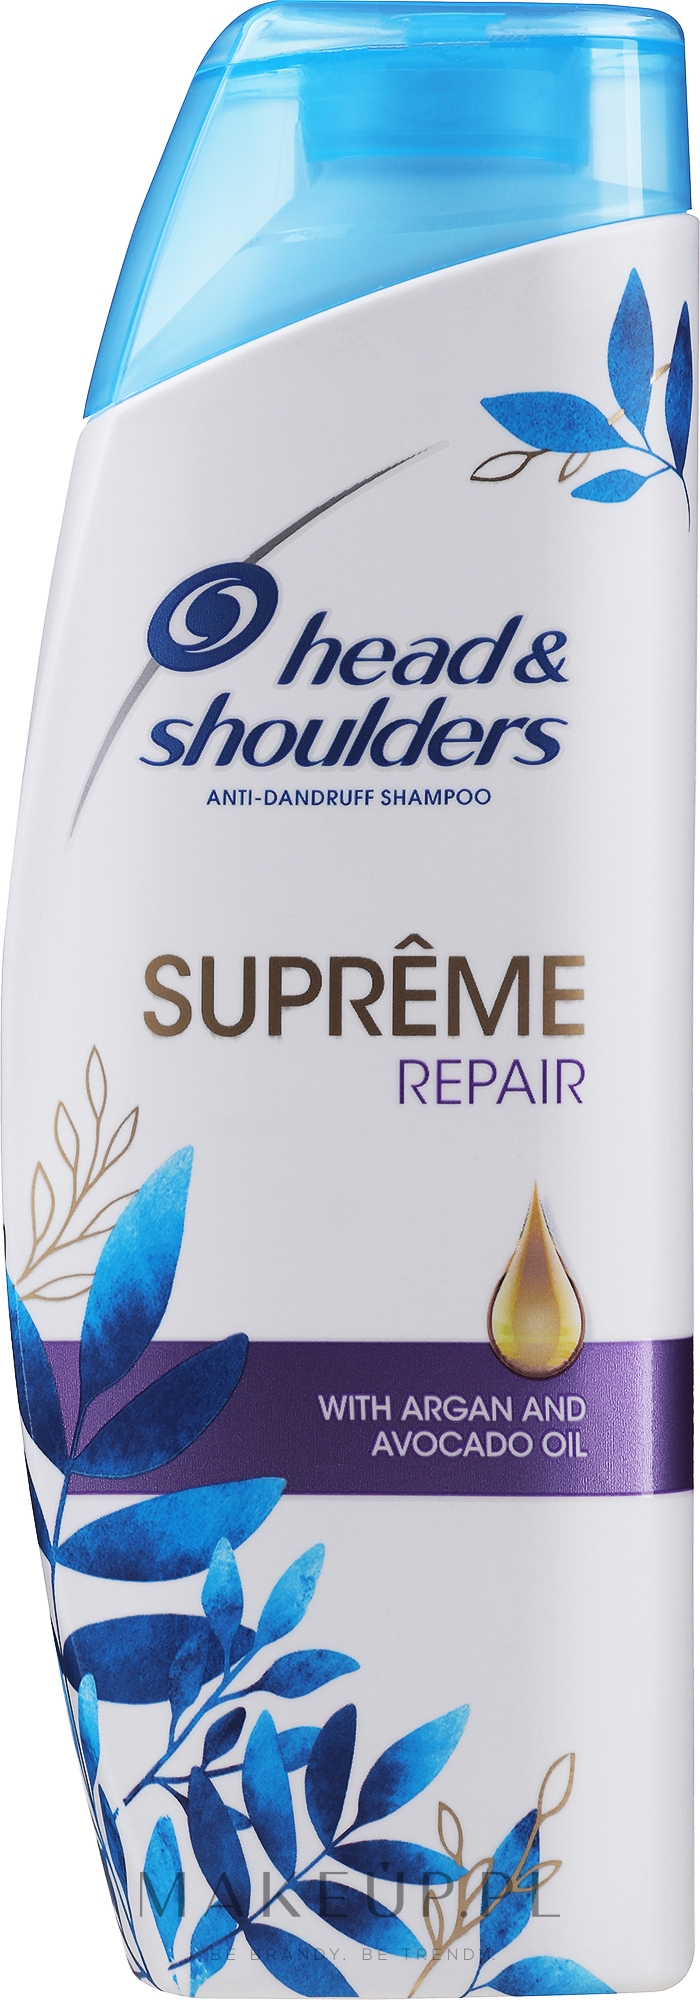 szampon head and shoulders argan opinie